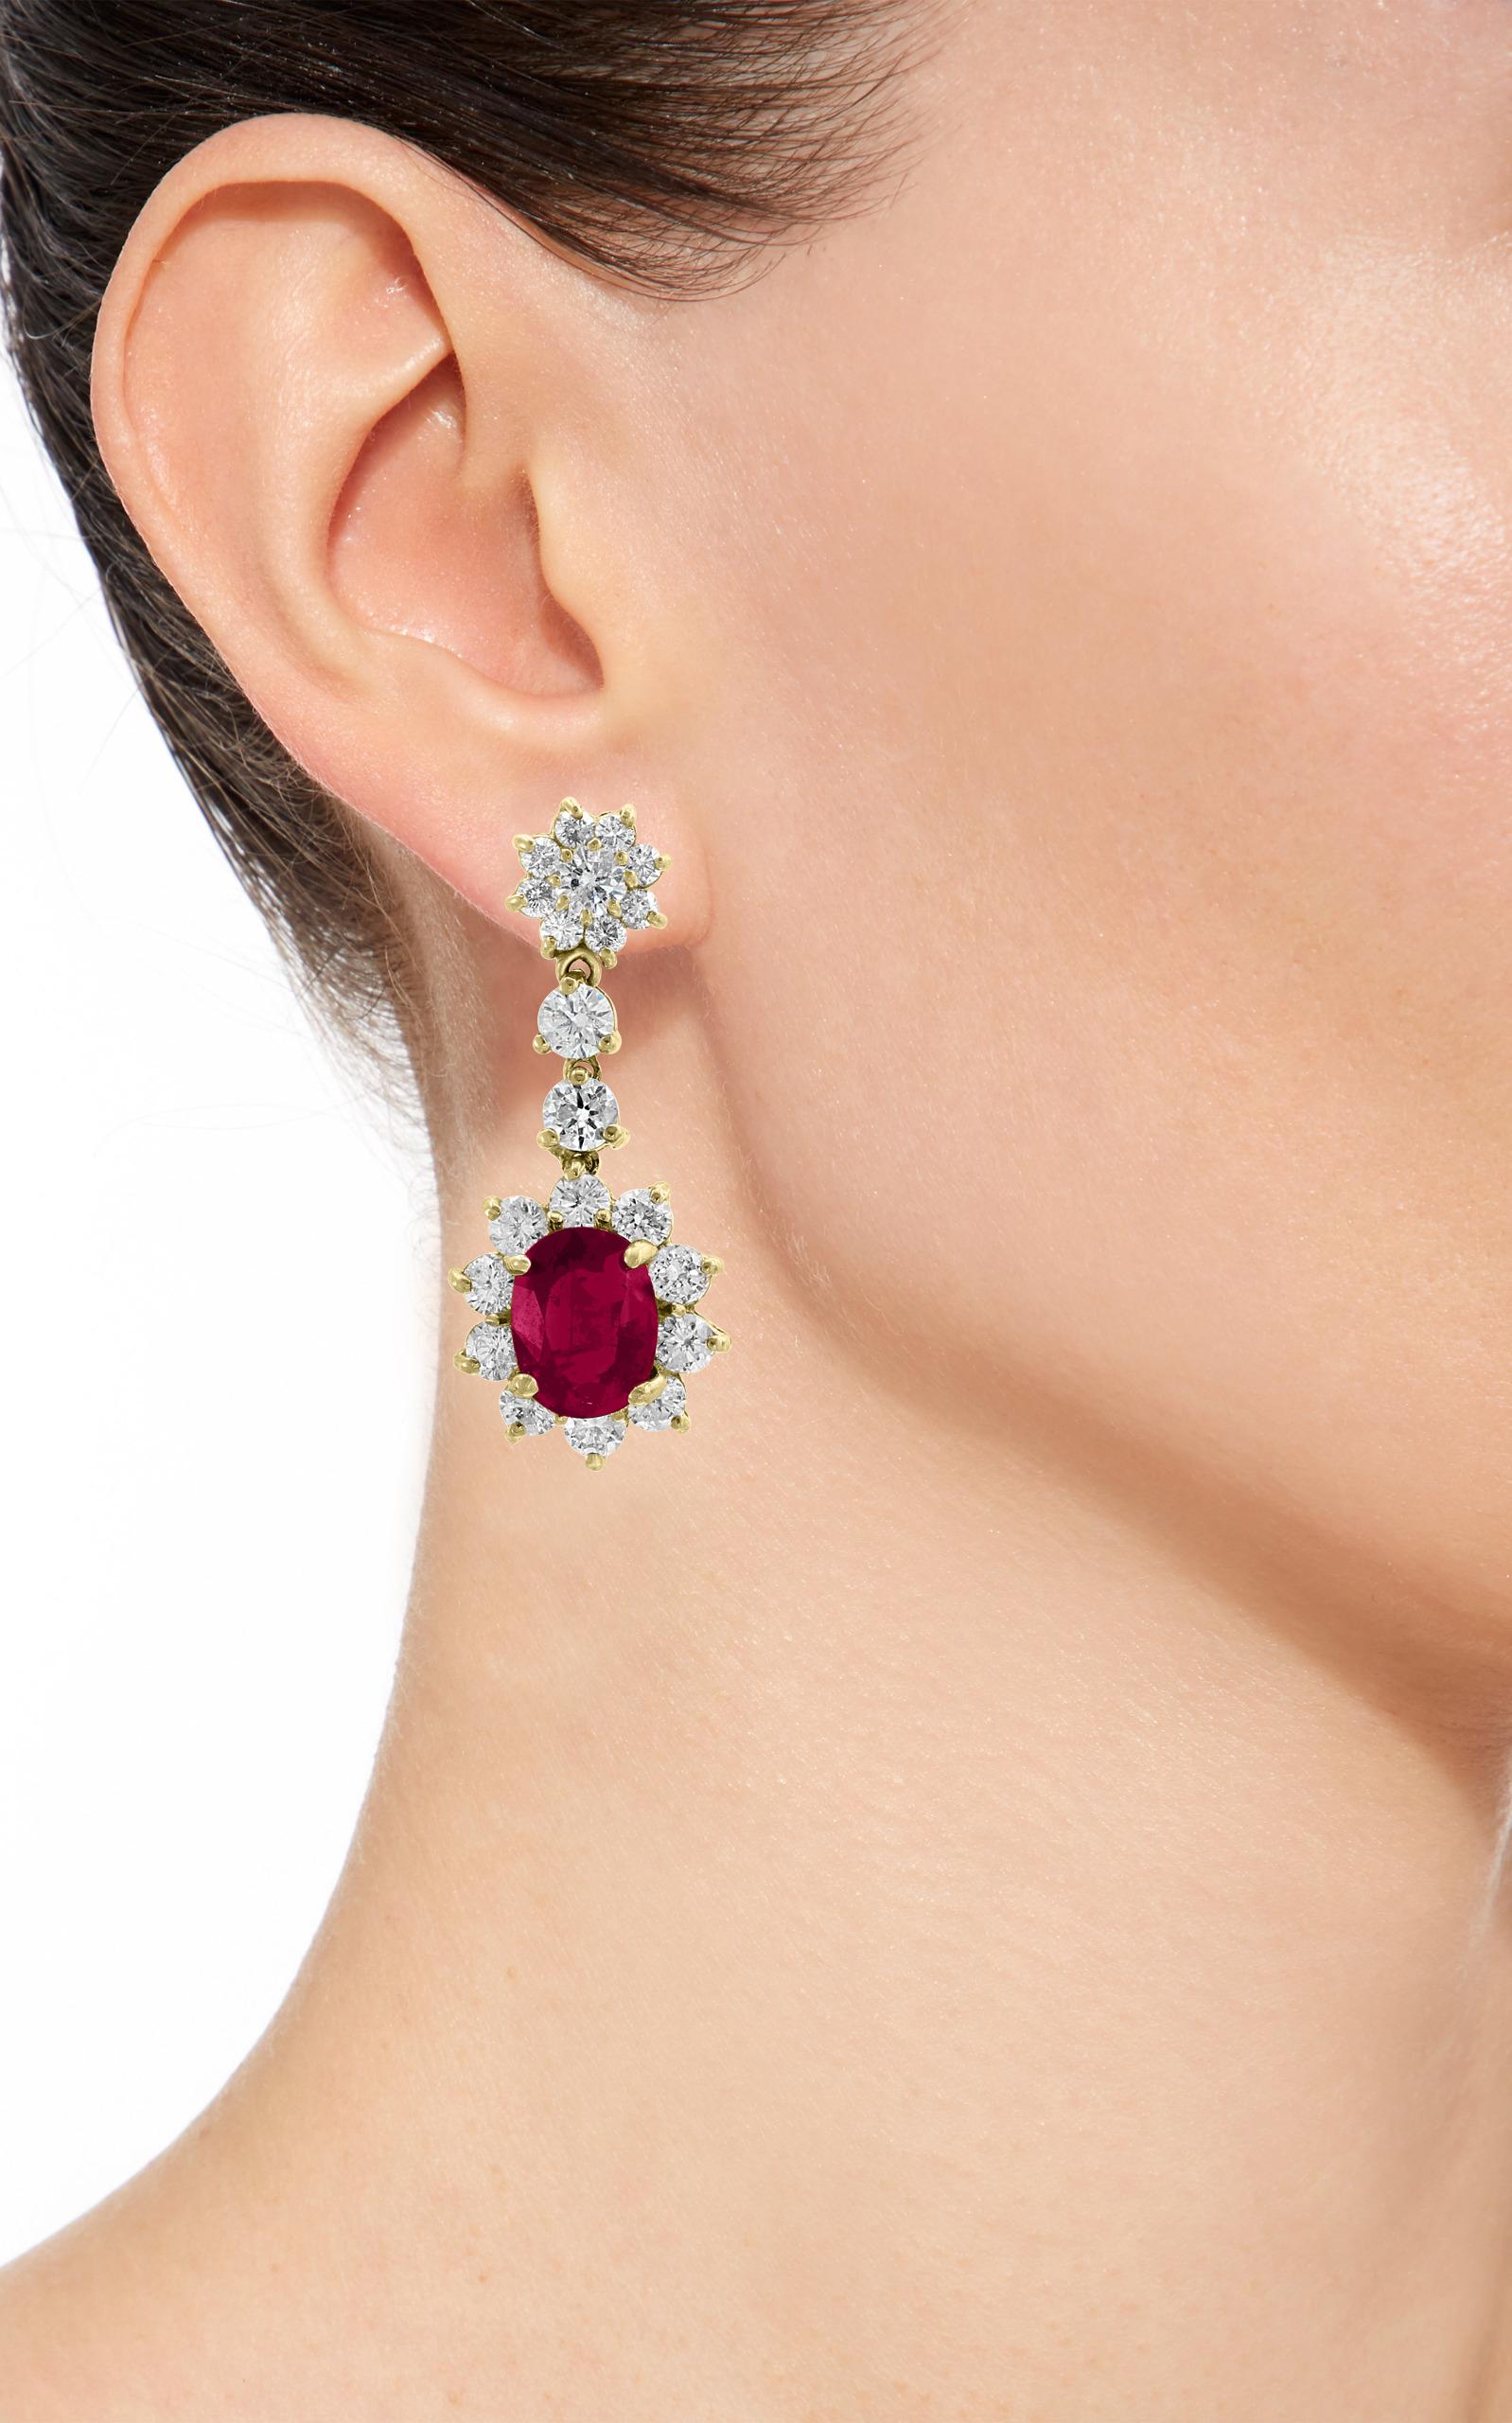 Women's 5.5 Carat Ruby and 5 Carat Diamond Hanging or Chandelier Earrings 18 Karat Gold